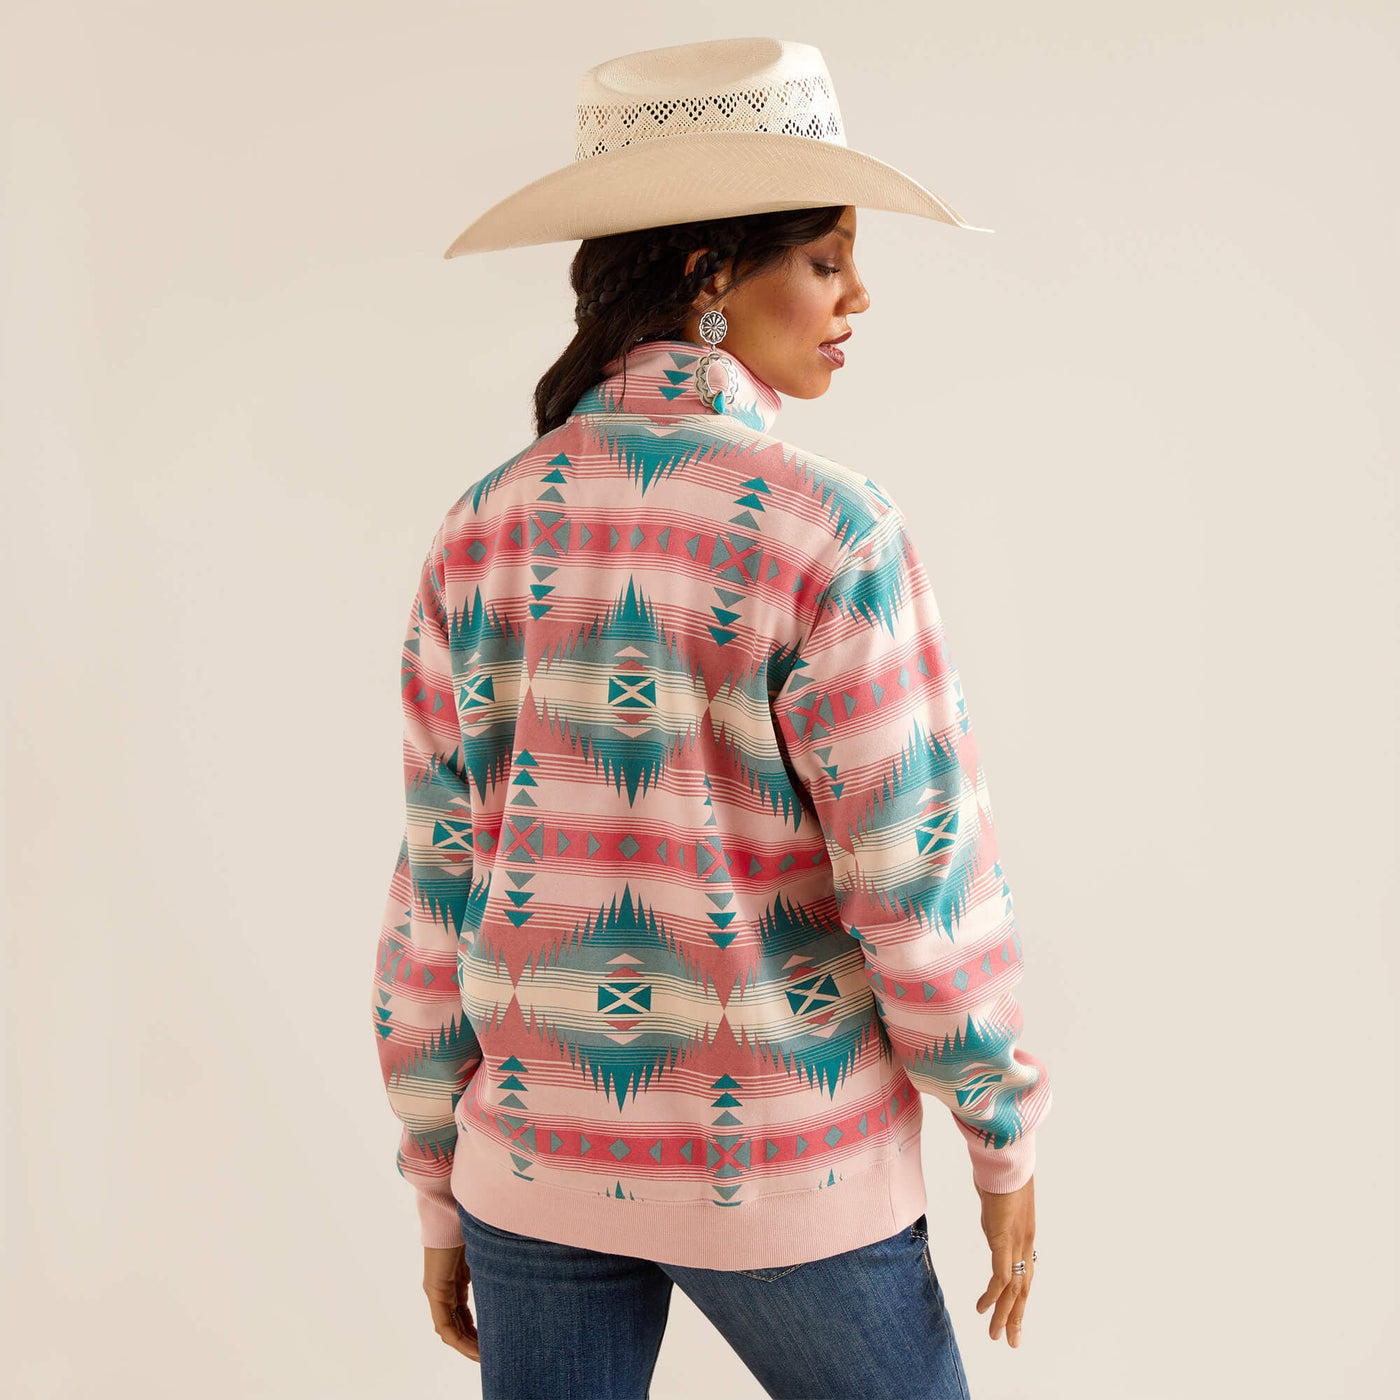 Ranger 1/2 Zip Pullover by Ariat - Pink Aztec